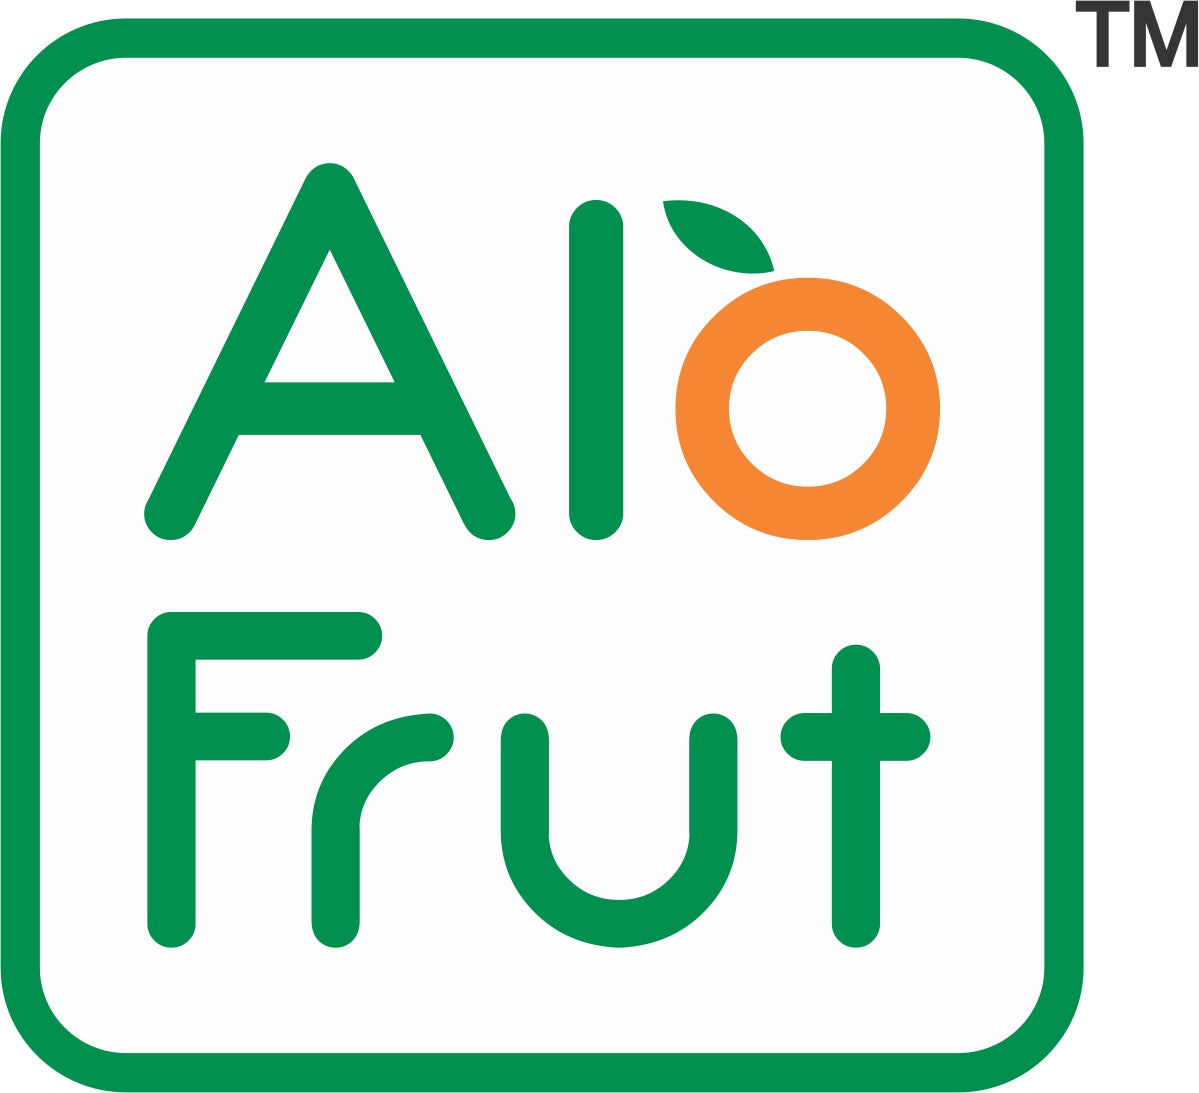 Alo Frut Guava Aloevera Chunks & Juice 150ml (Pack of 60)